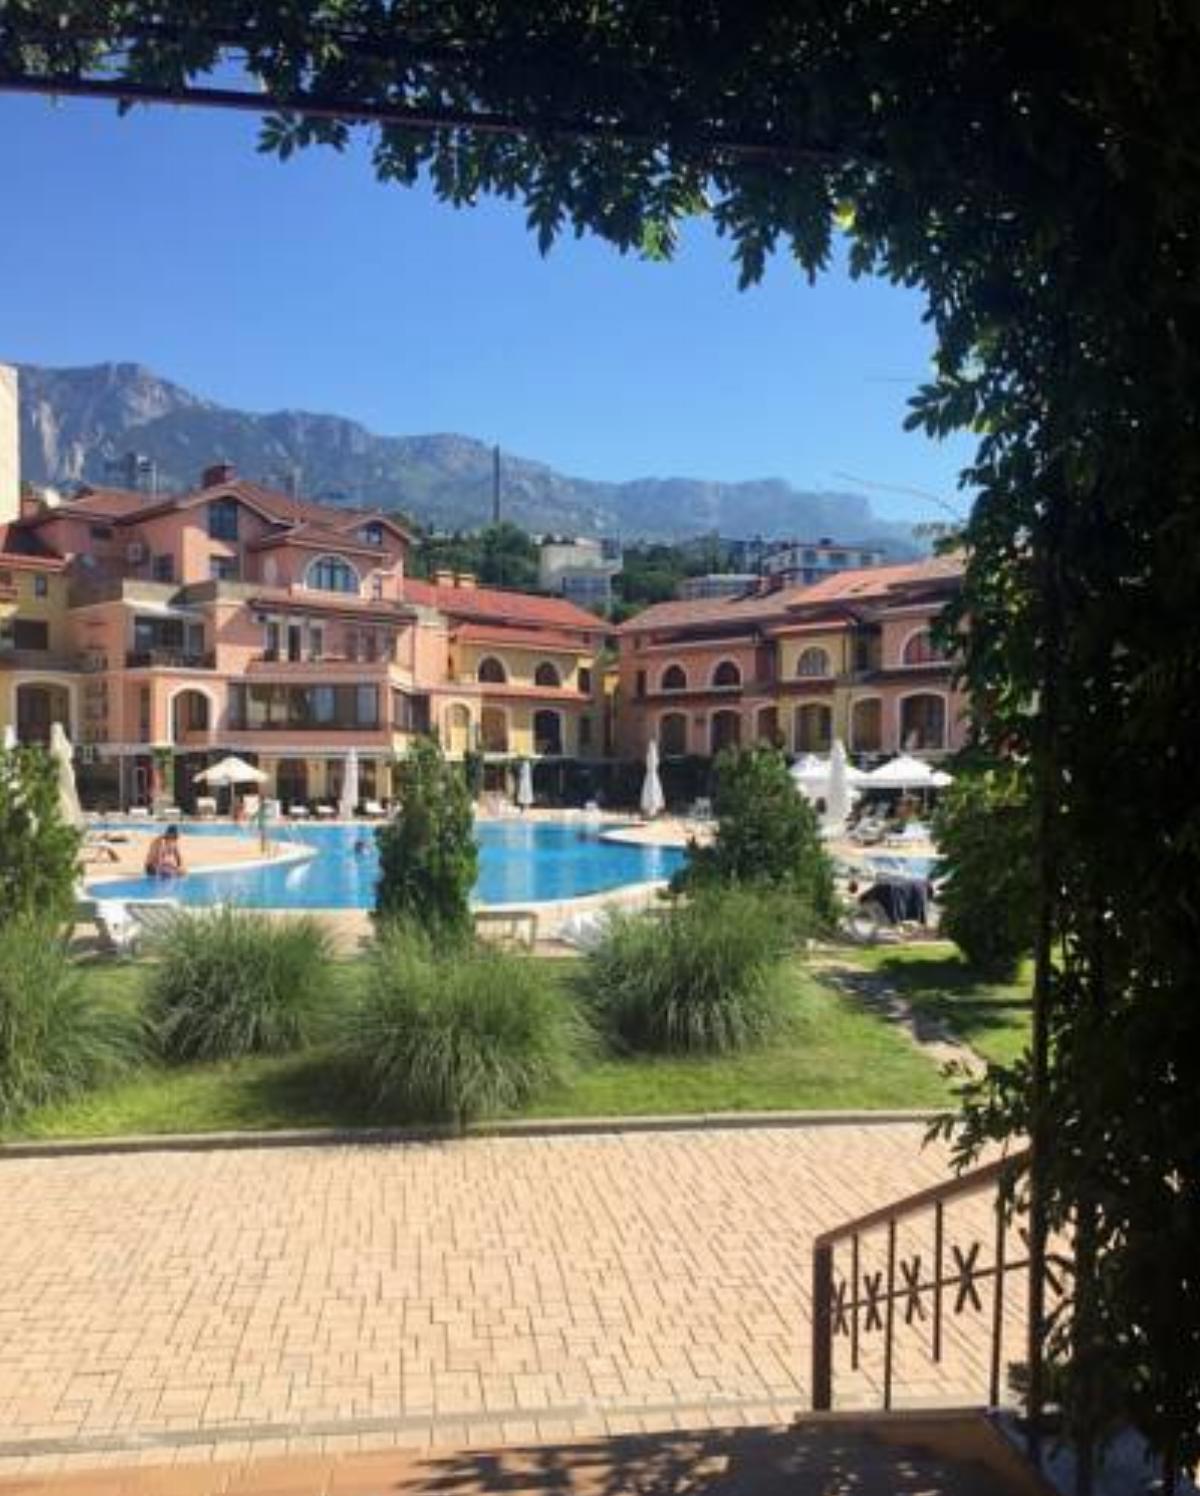 Spanish Village Apartments Hotel Alupka Crimea